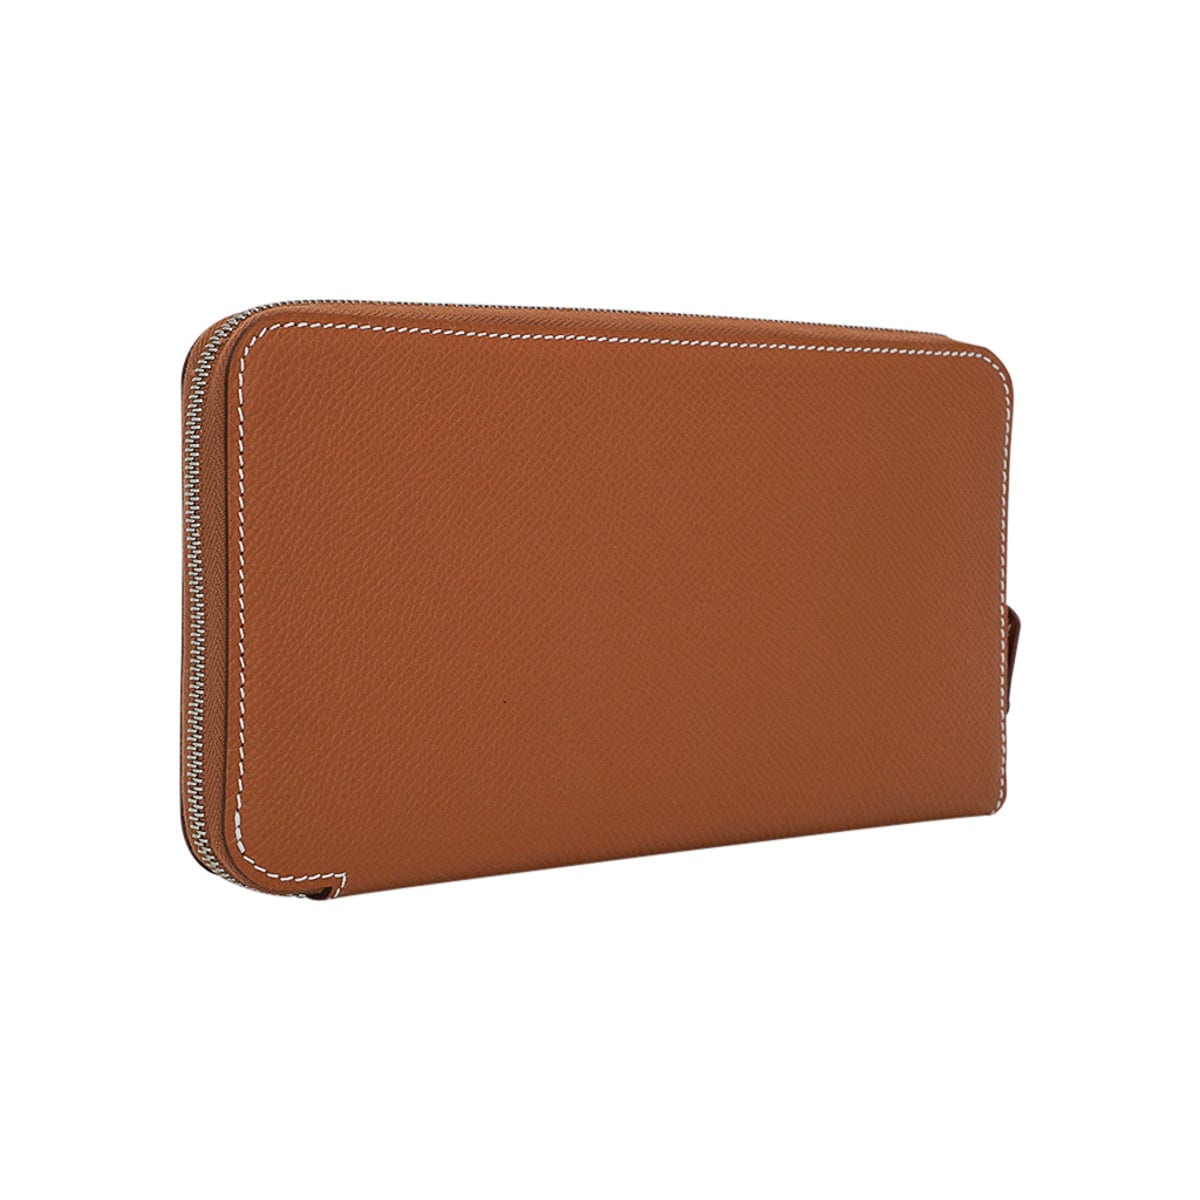 HERMES Wallet With Smaller Wallet Inside Brown , Orange, Or